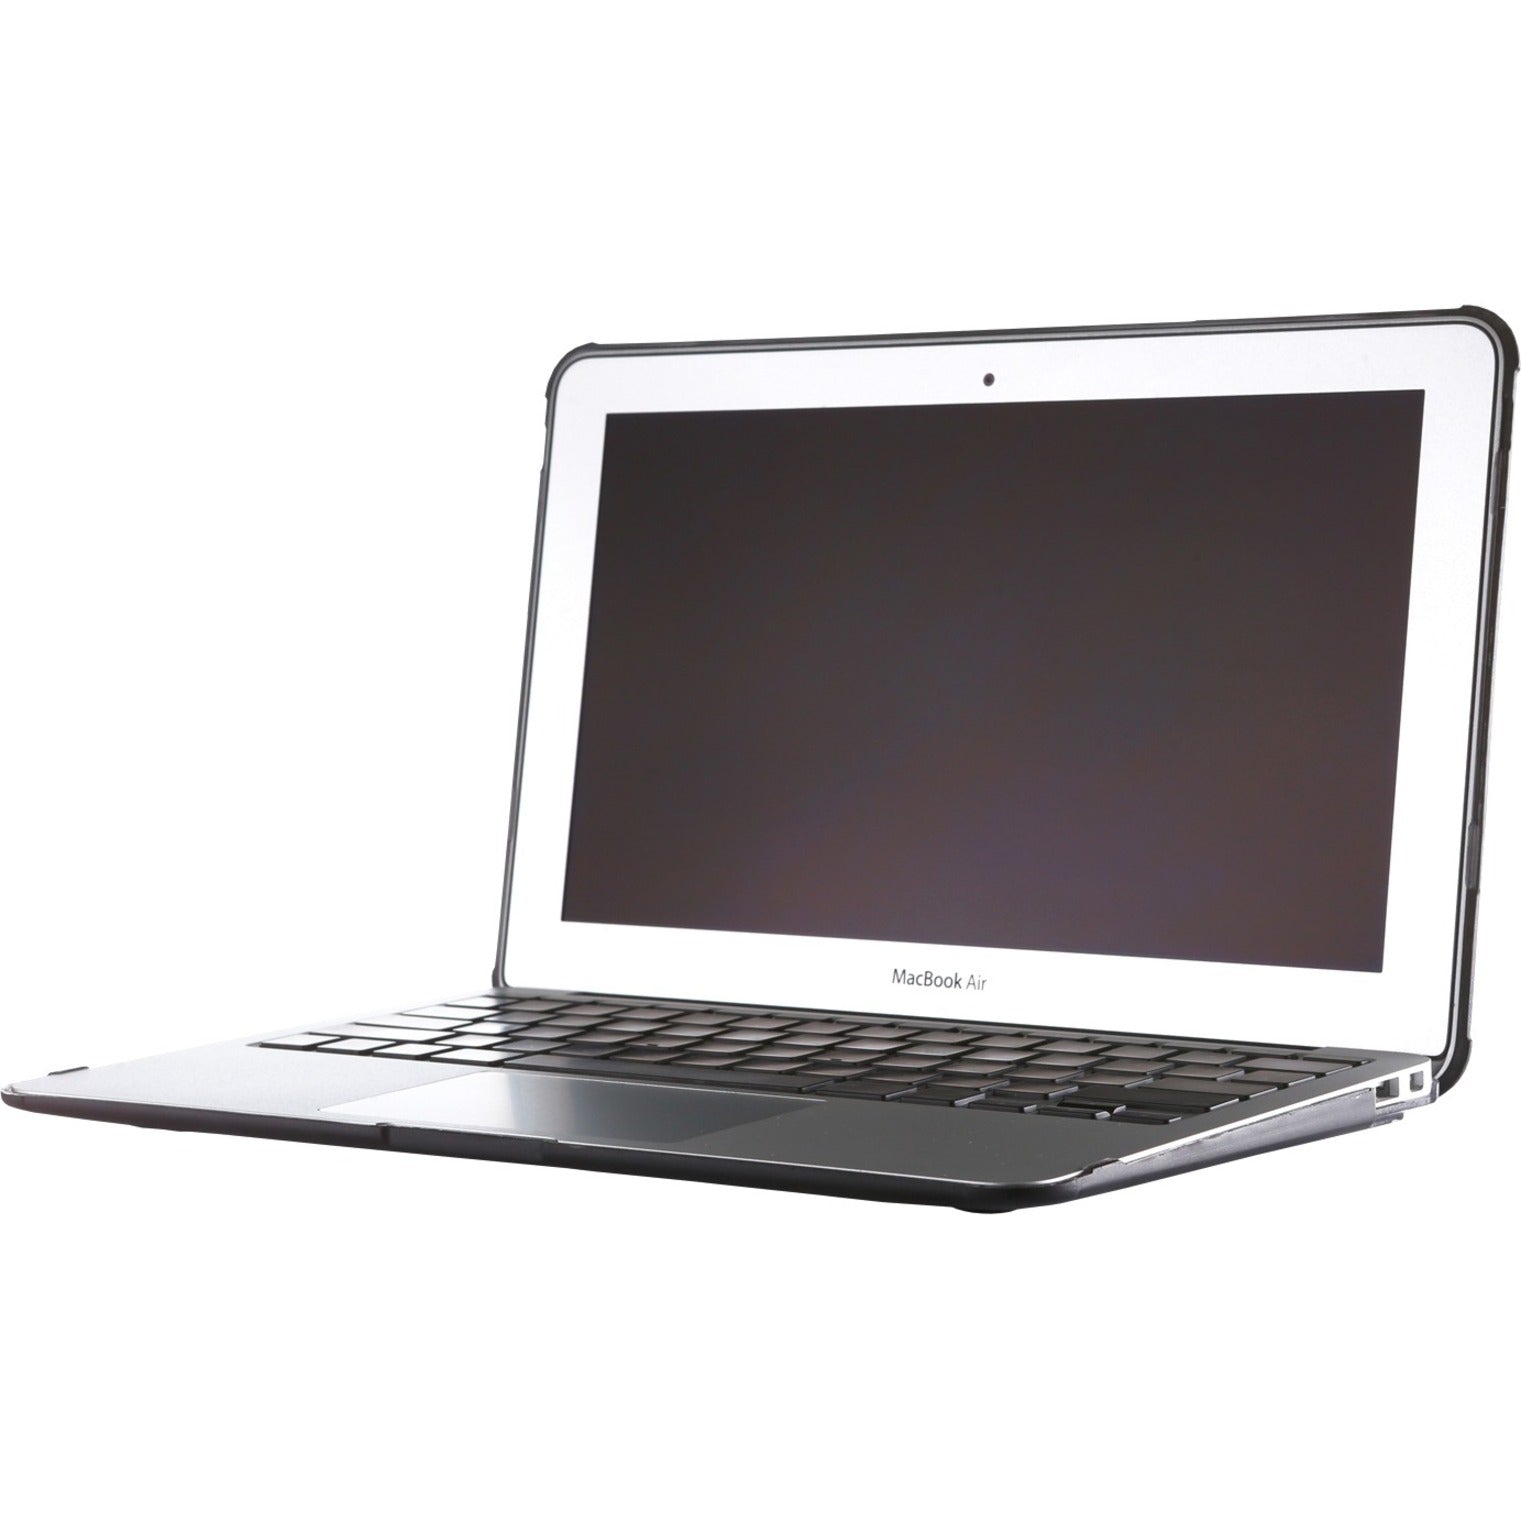 STM Goods stm-122-094M-01 Dux Rugged Case for MacBook 13" - Black/Clear, Water Resistant